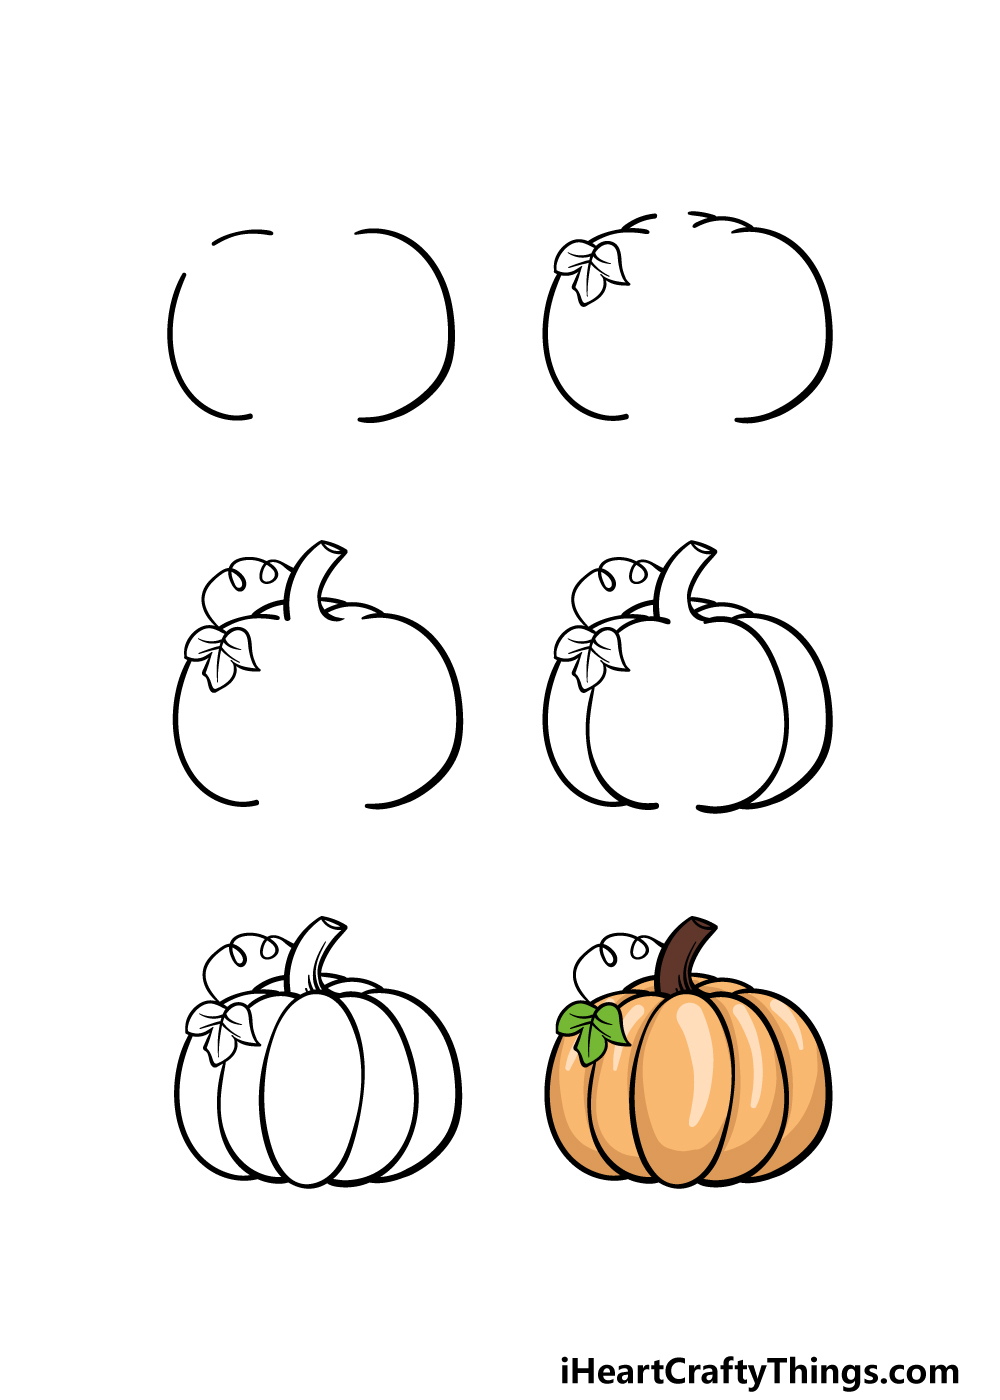 how to draw a cartoon pumpkin in 6 steps